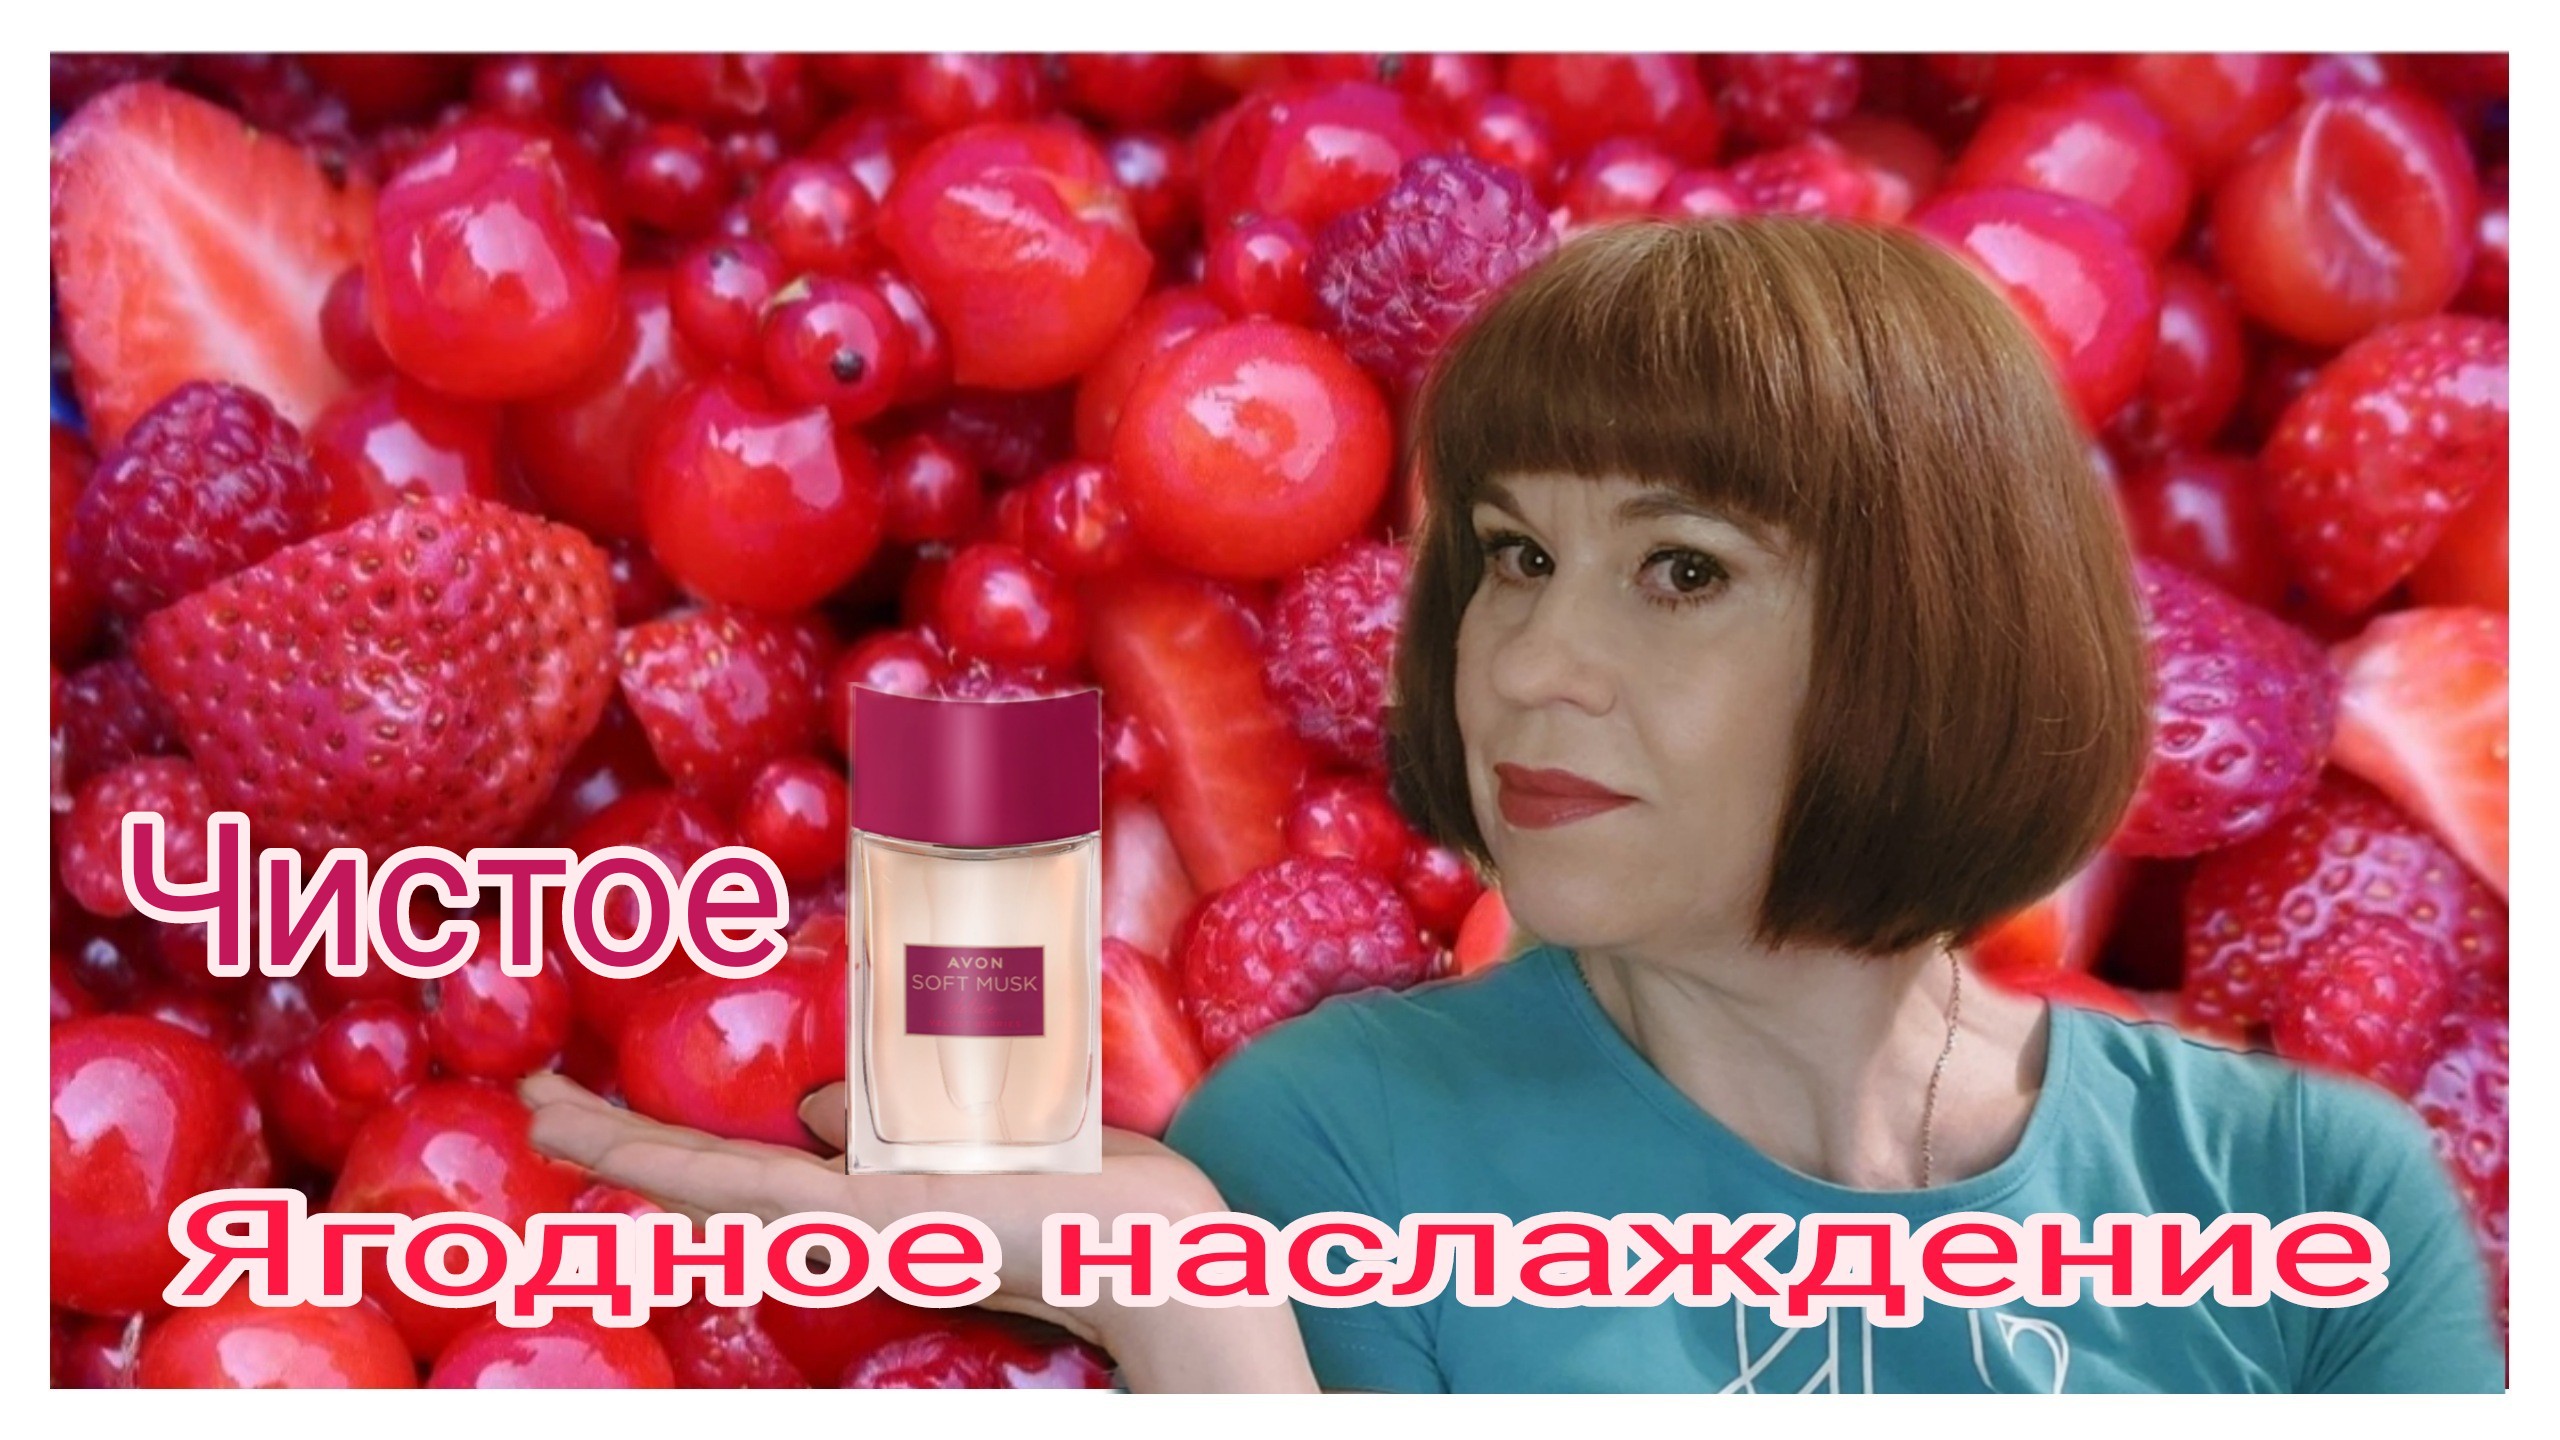 133. Avon Soft Musk Delice Velvet Berries?ягодное наслаждение || новый фланкер#2